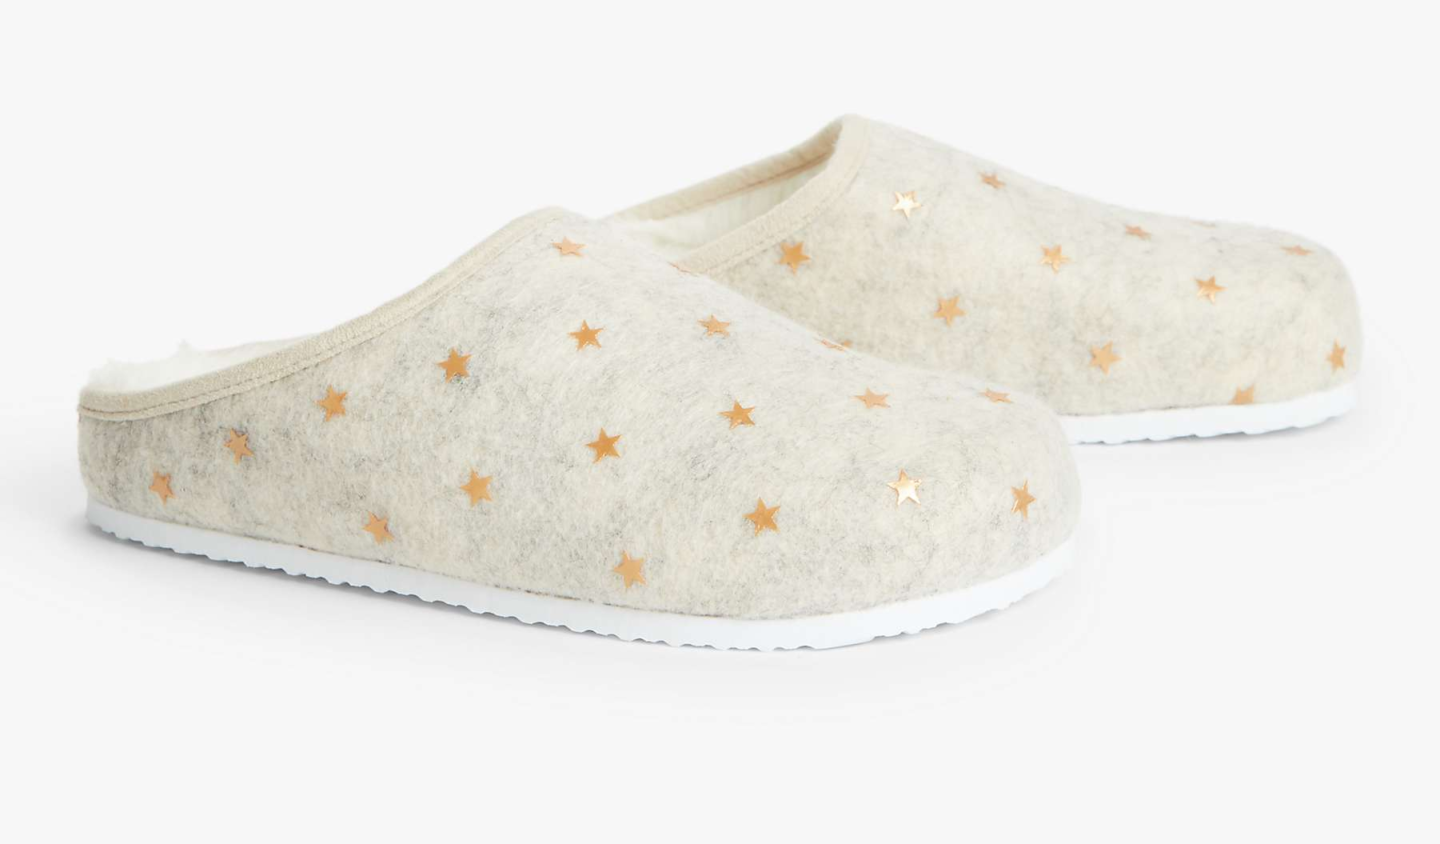 Star slippers